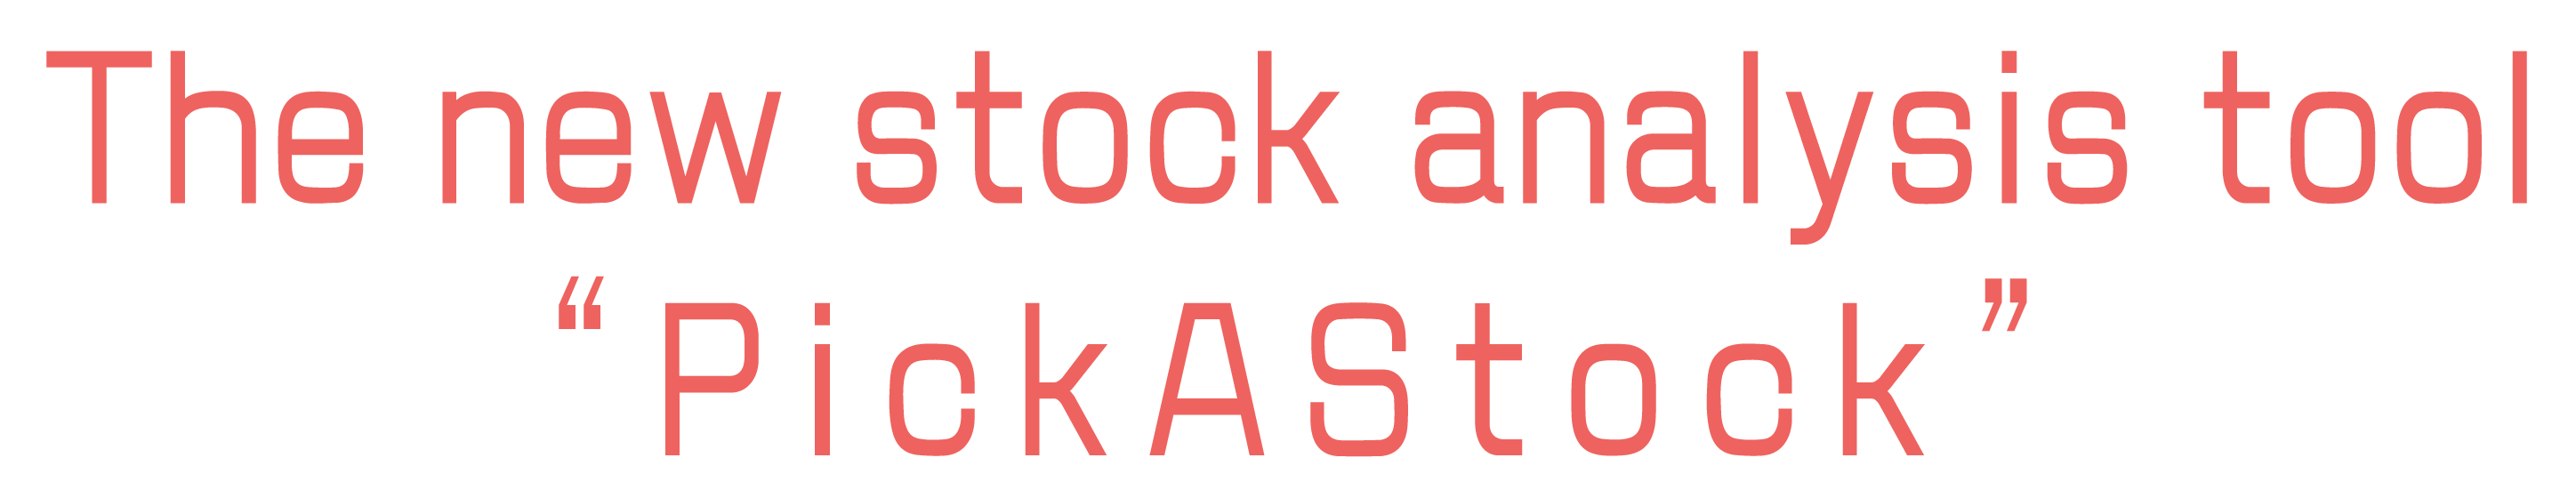 The new stock analysis tool“PickAStock”